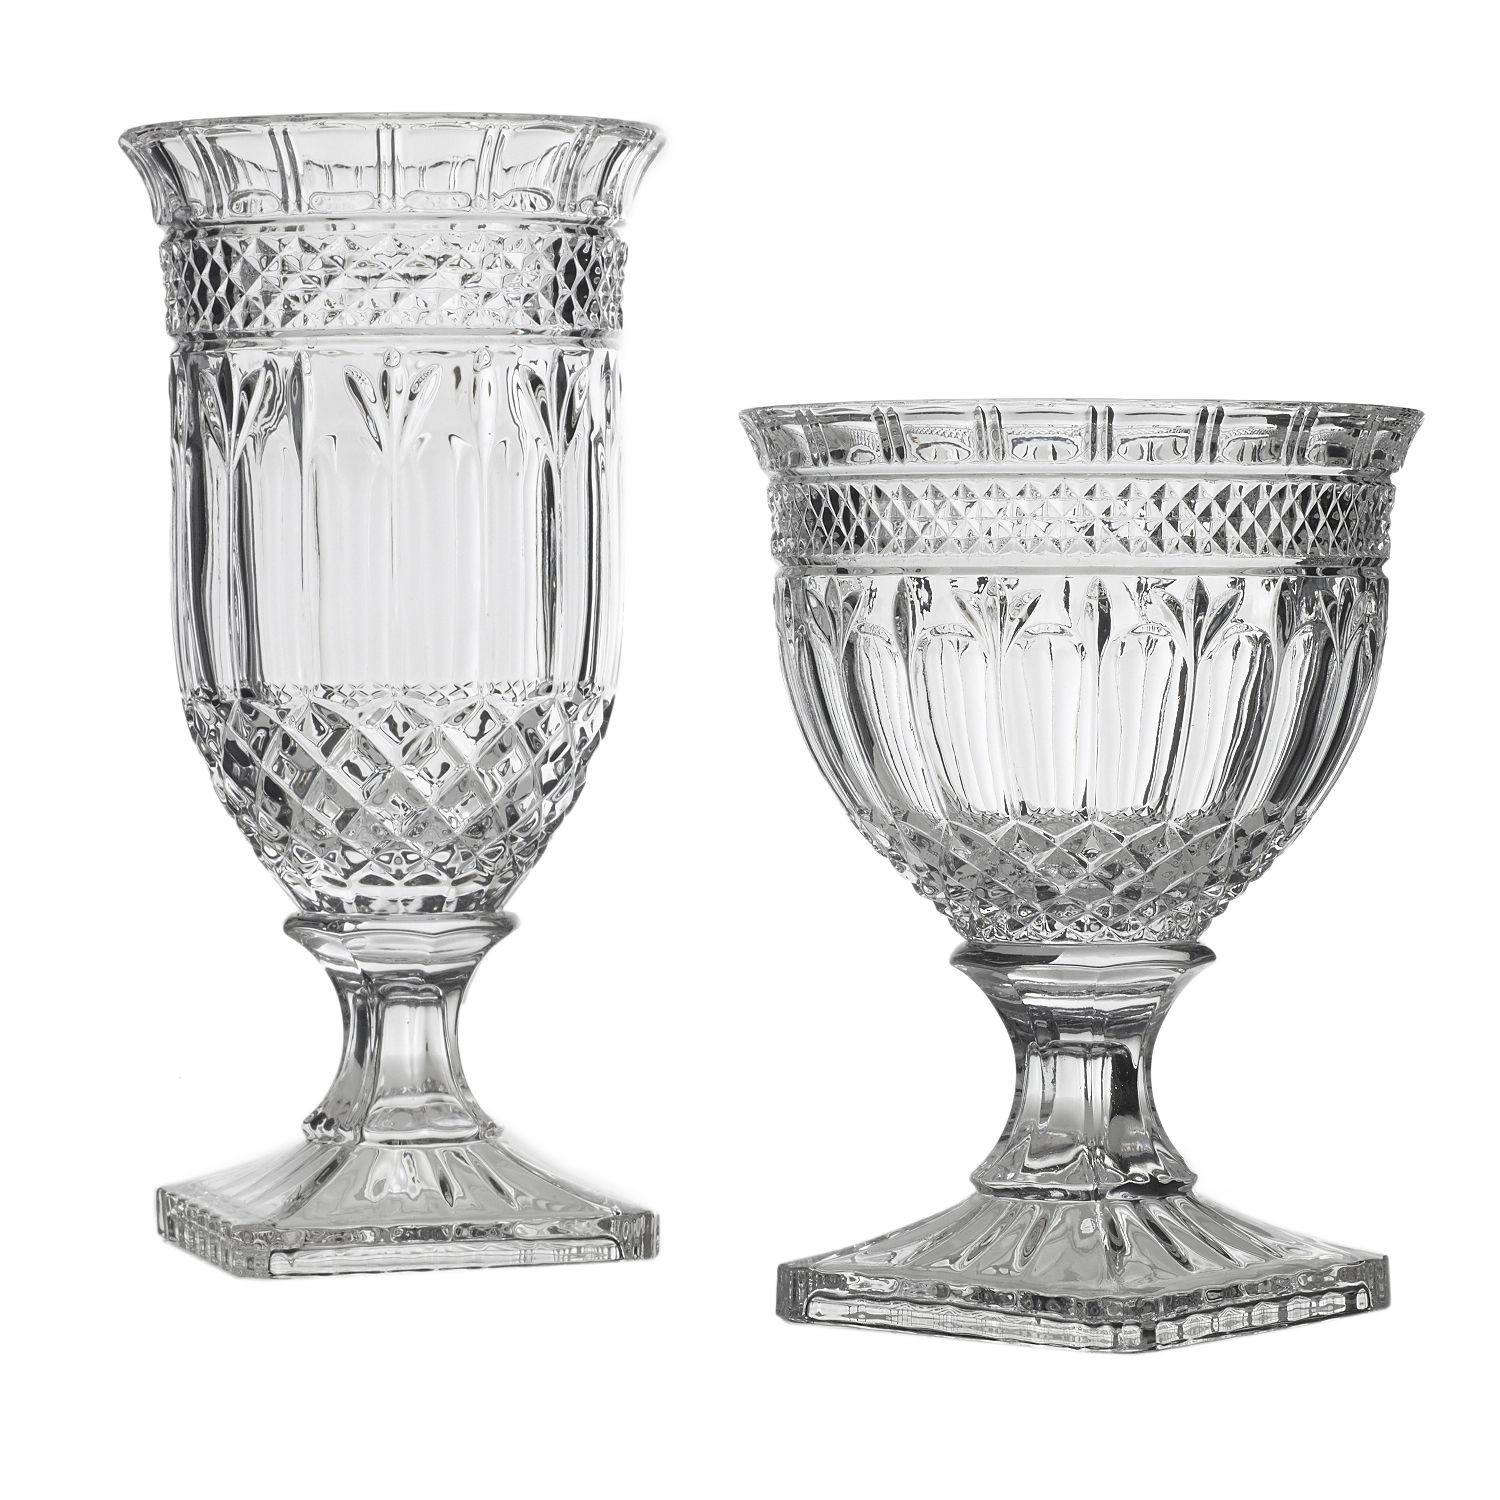 Silver Pedestal Vase Of Marnier Vase Accent Decor Mariah Justin Pinterest Throughout Marnier Vase Accent Decor